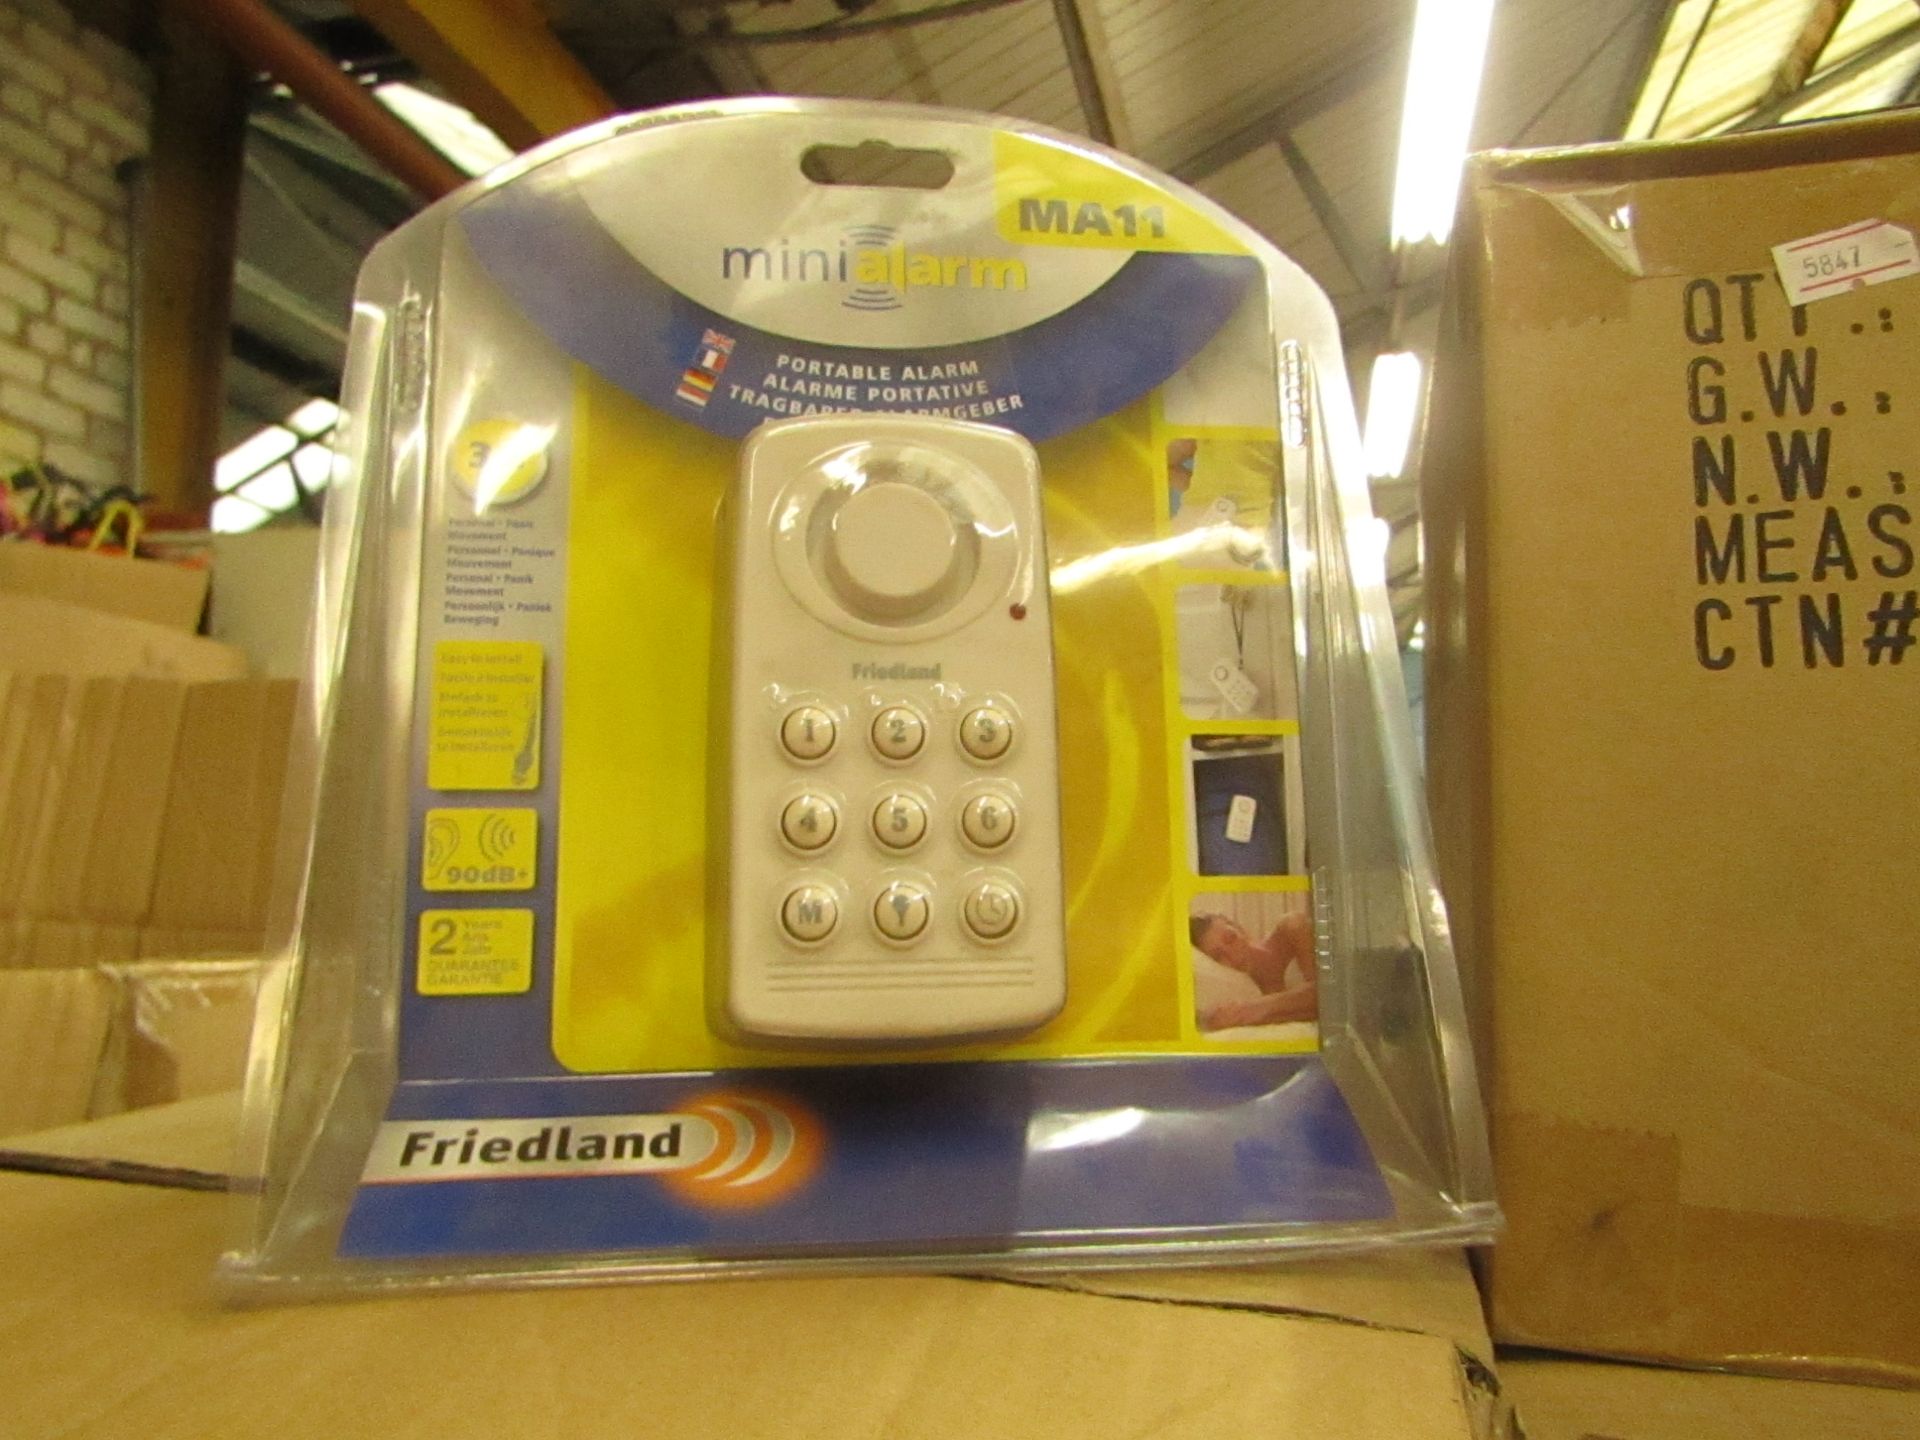 6 x Friedland MA11 Mini Alarms. Packaged